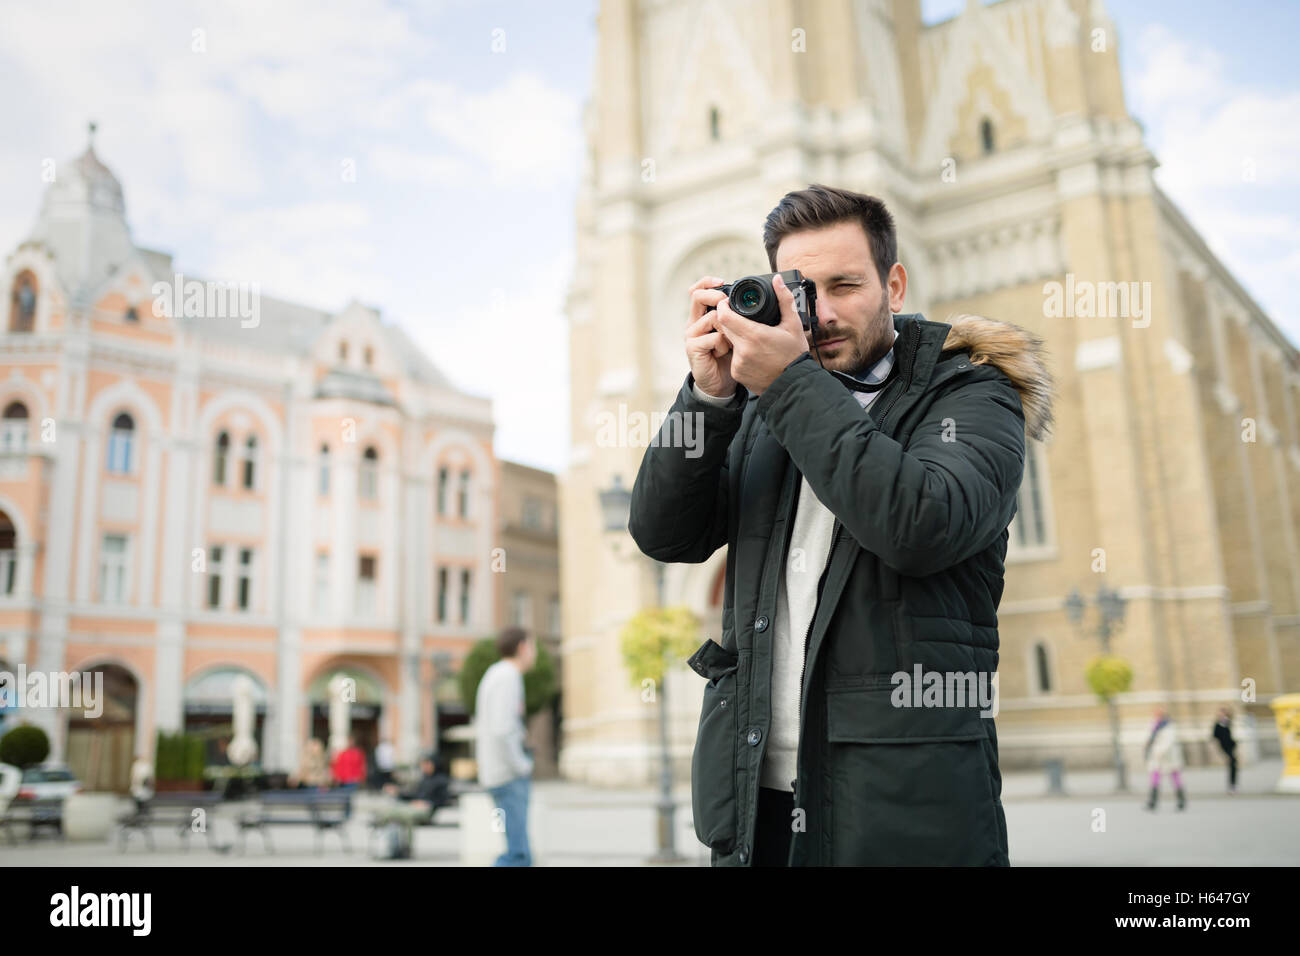 Tourist taking photos of city with camera Stock Photo